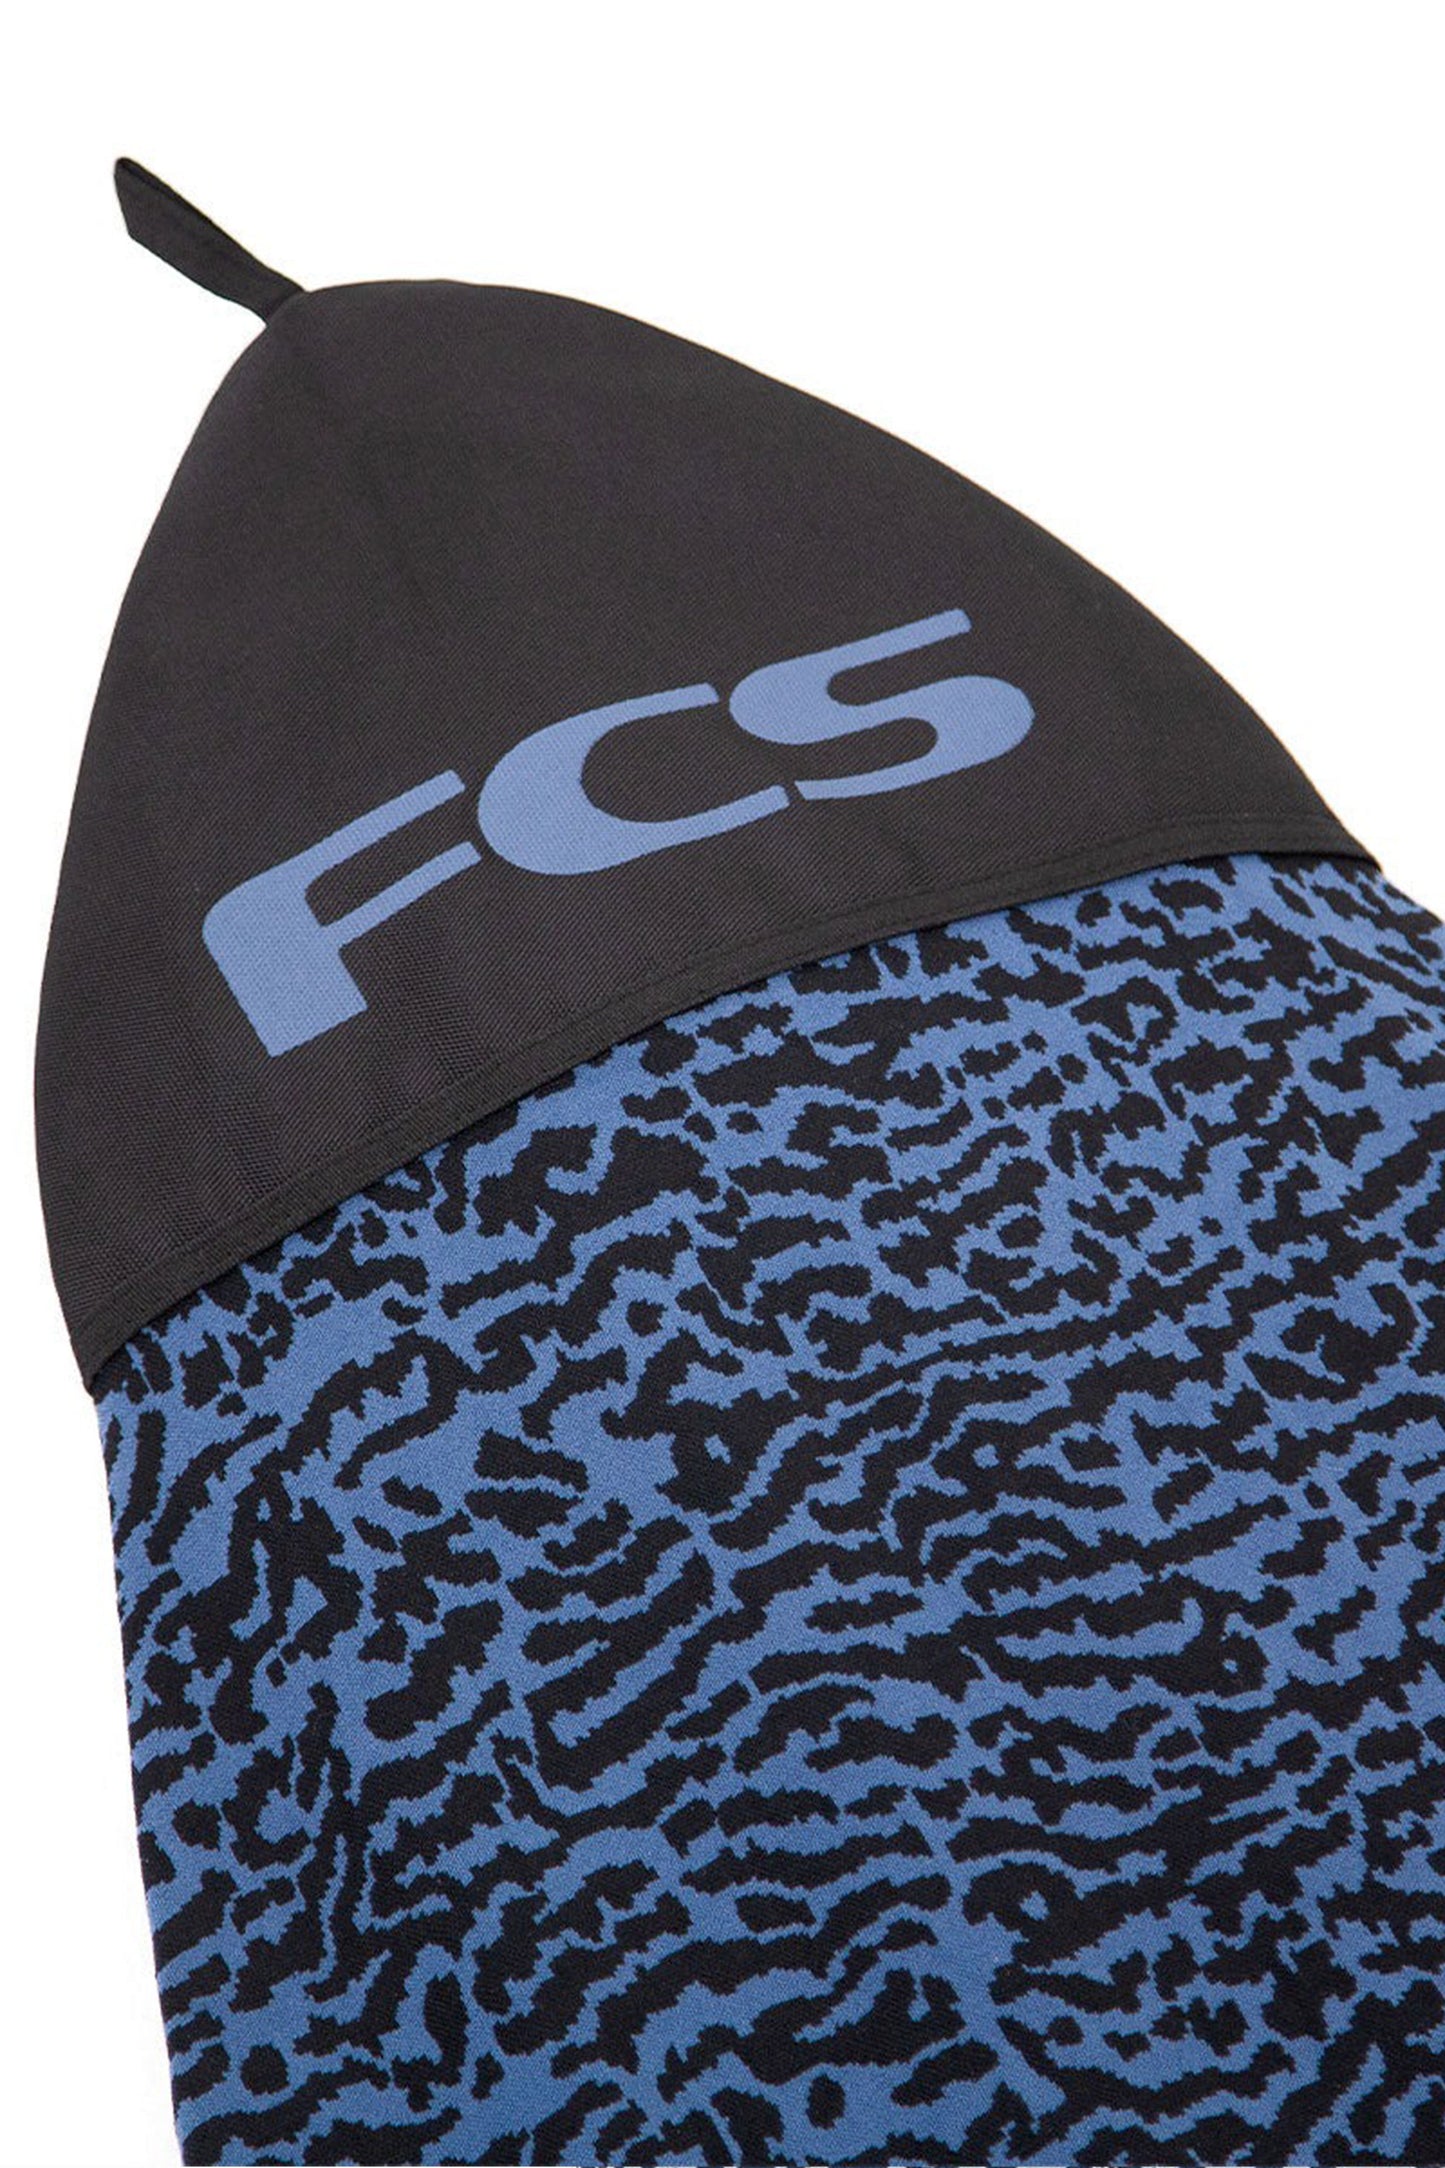 Pukas-Surf-Shop-FCS-boardbags-strech-fun-board-stone-blue